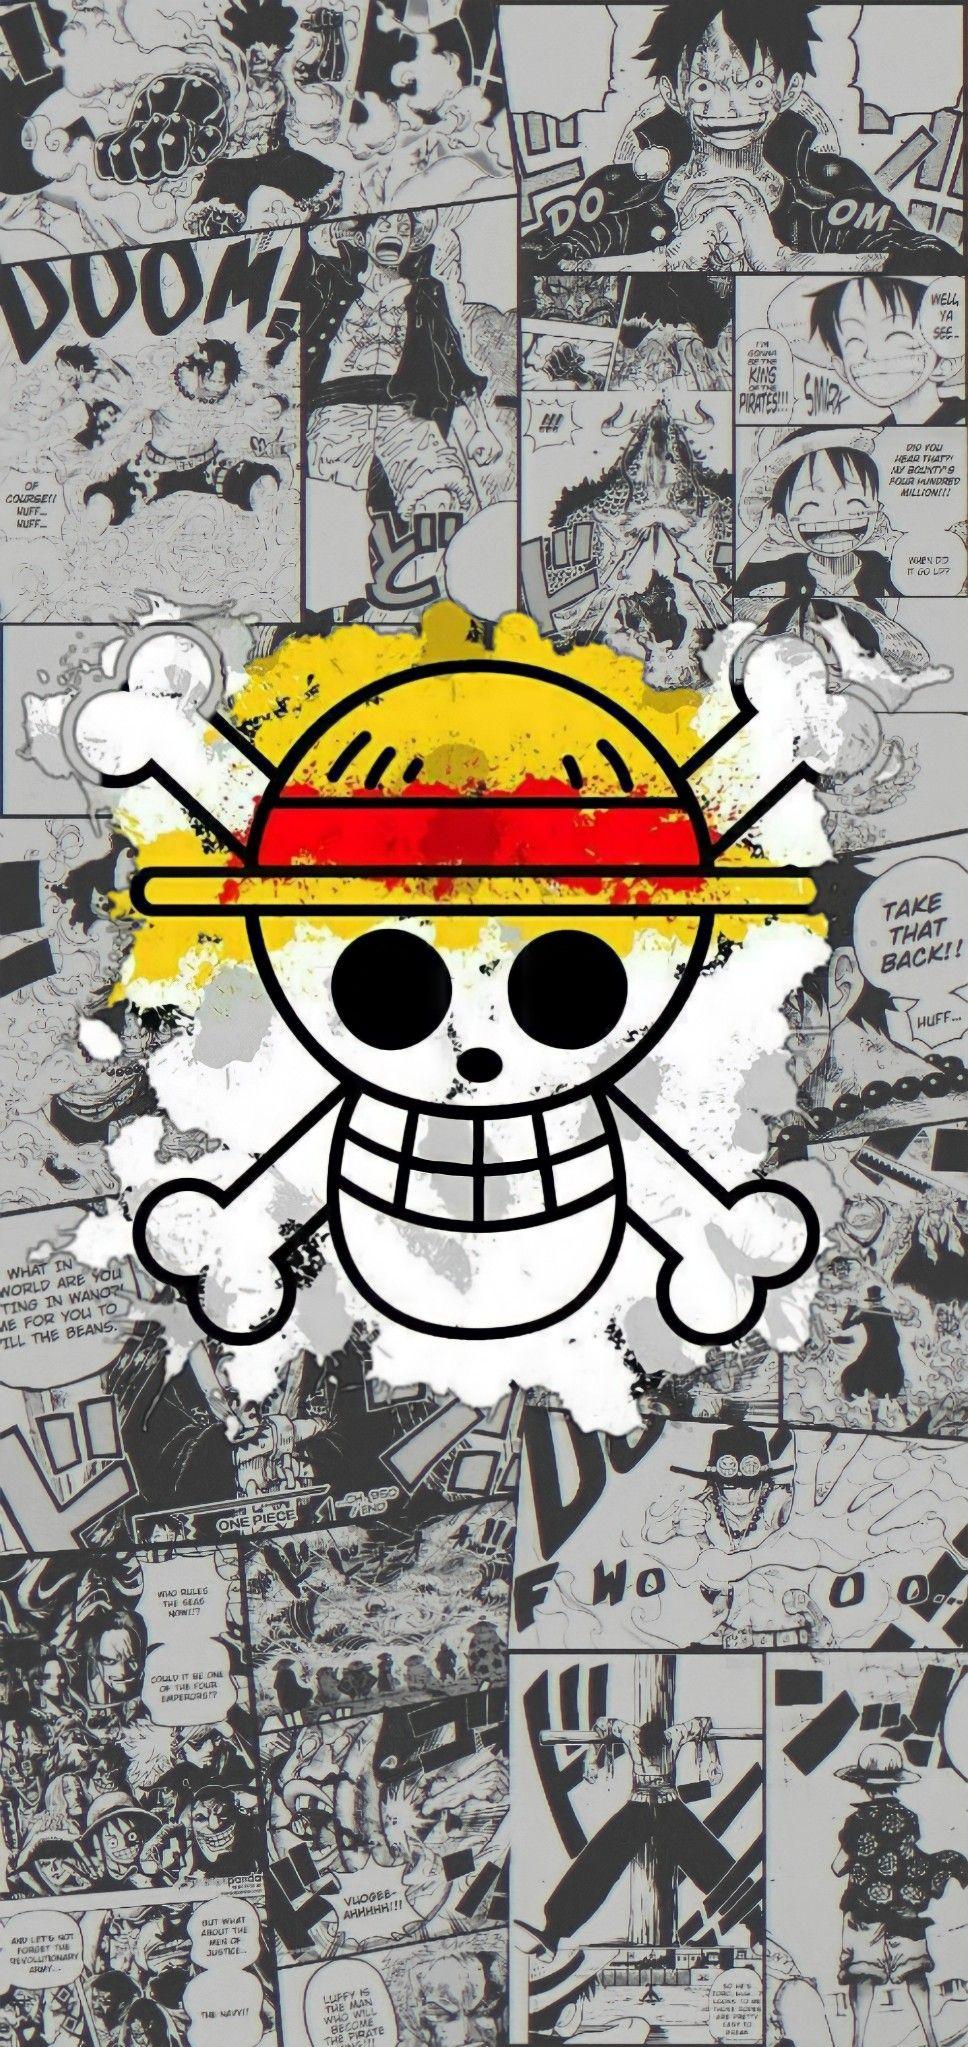 One Piece Wallpaper iPhone